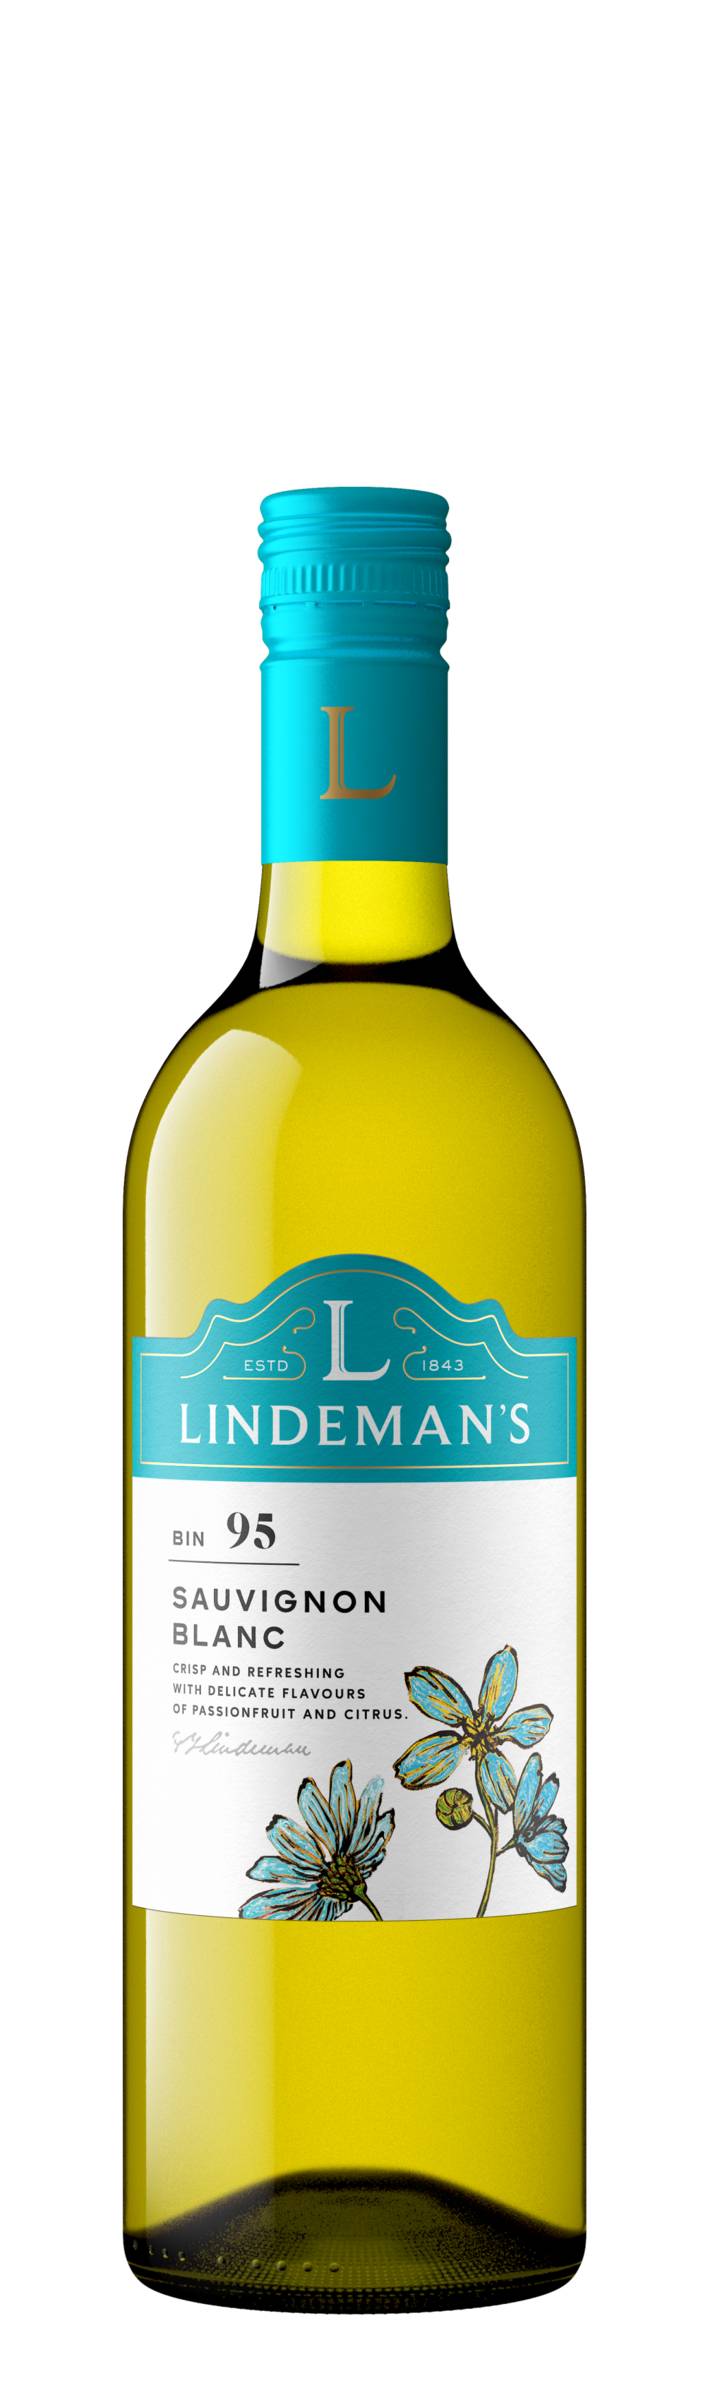 Lindemans Bin 95 Sauvignon Blanc 750ml